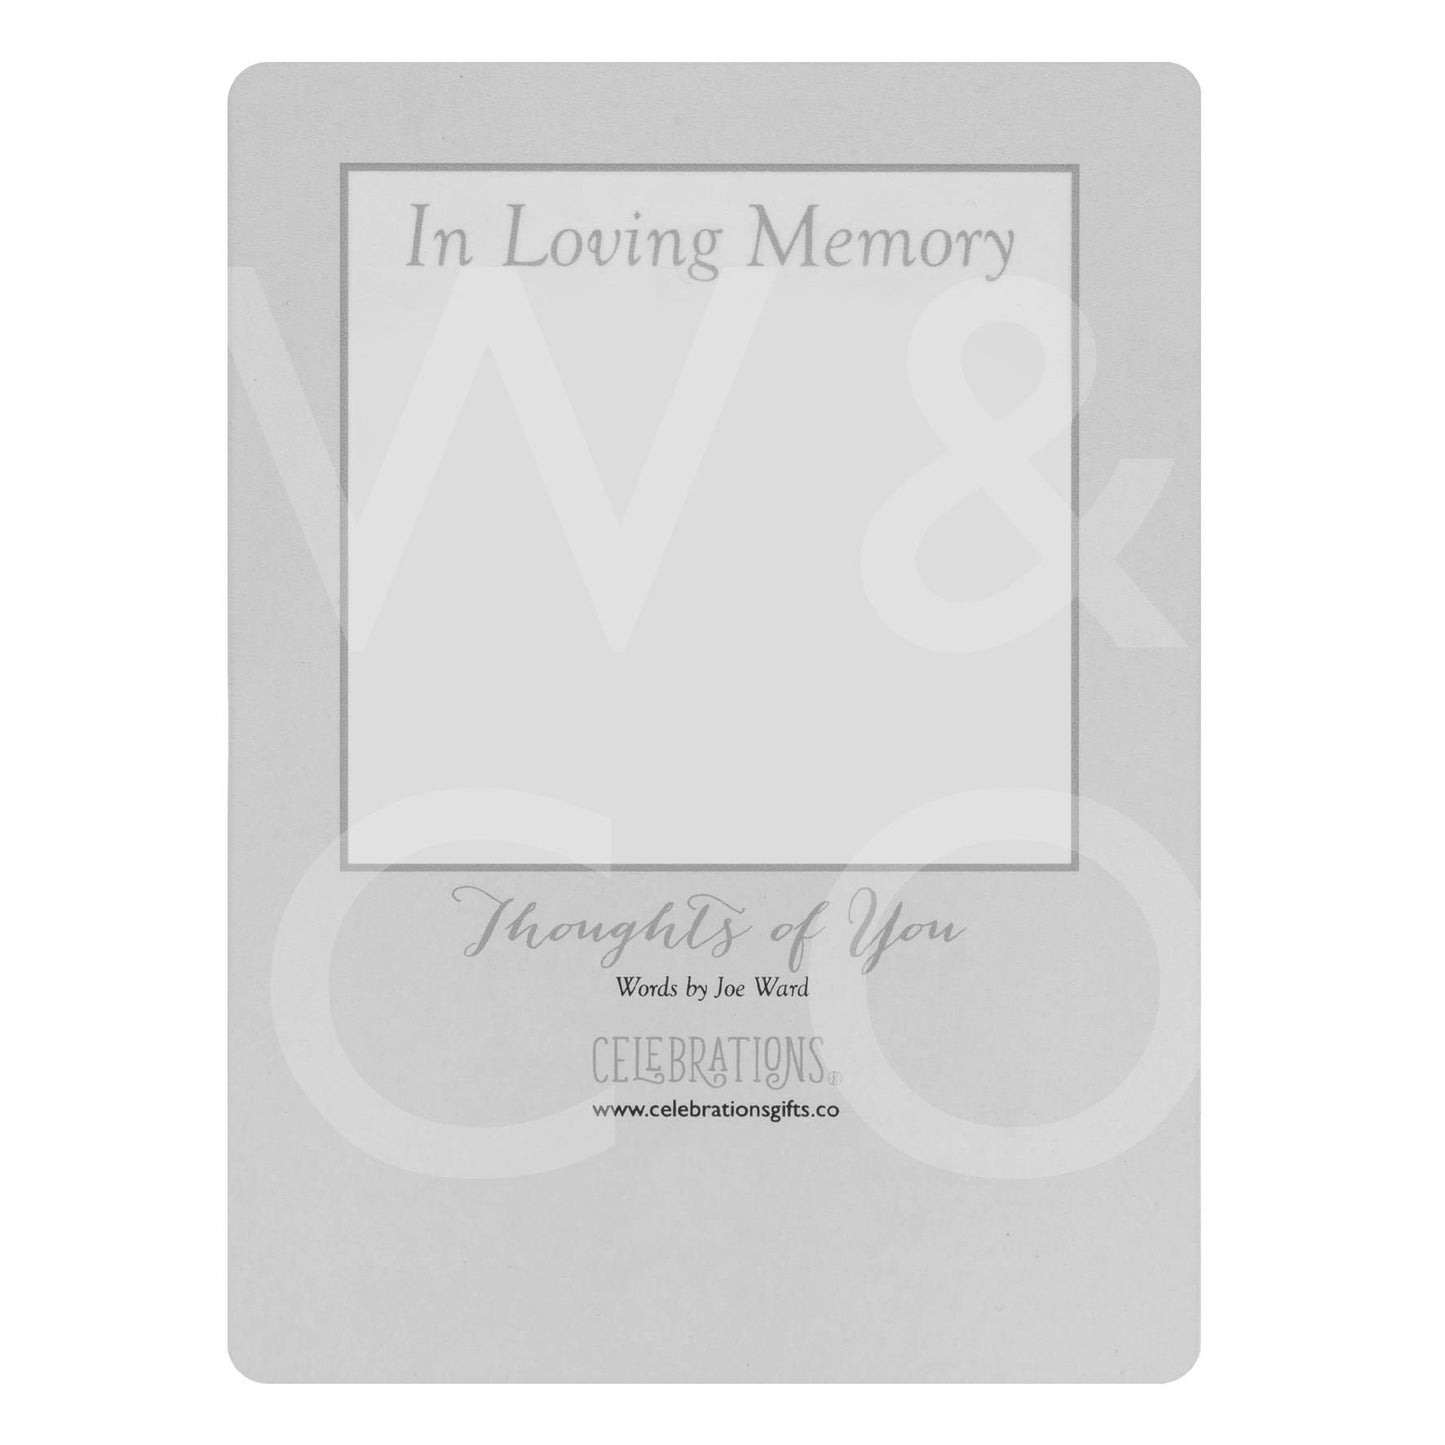 Graveside Memorial Cards - Someone Special